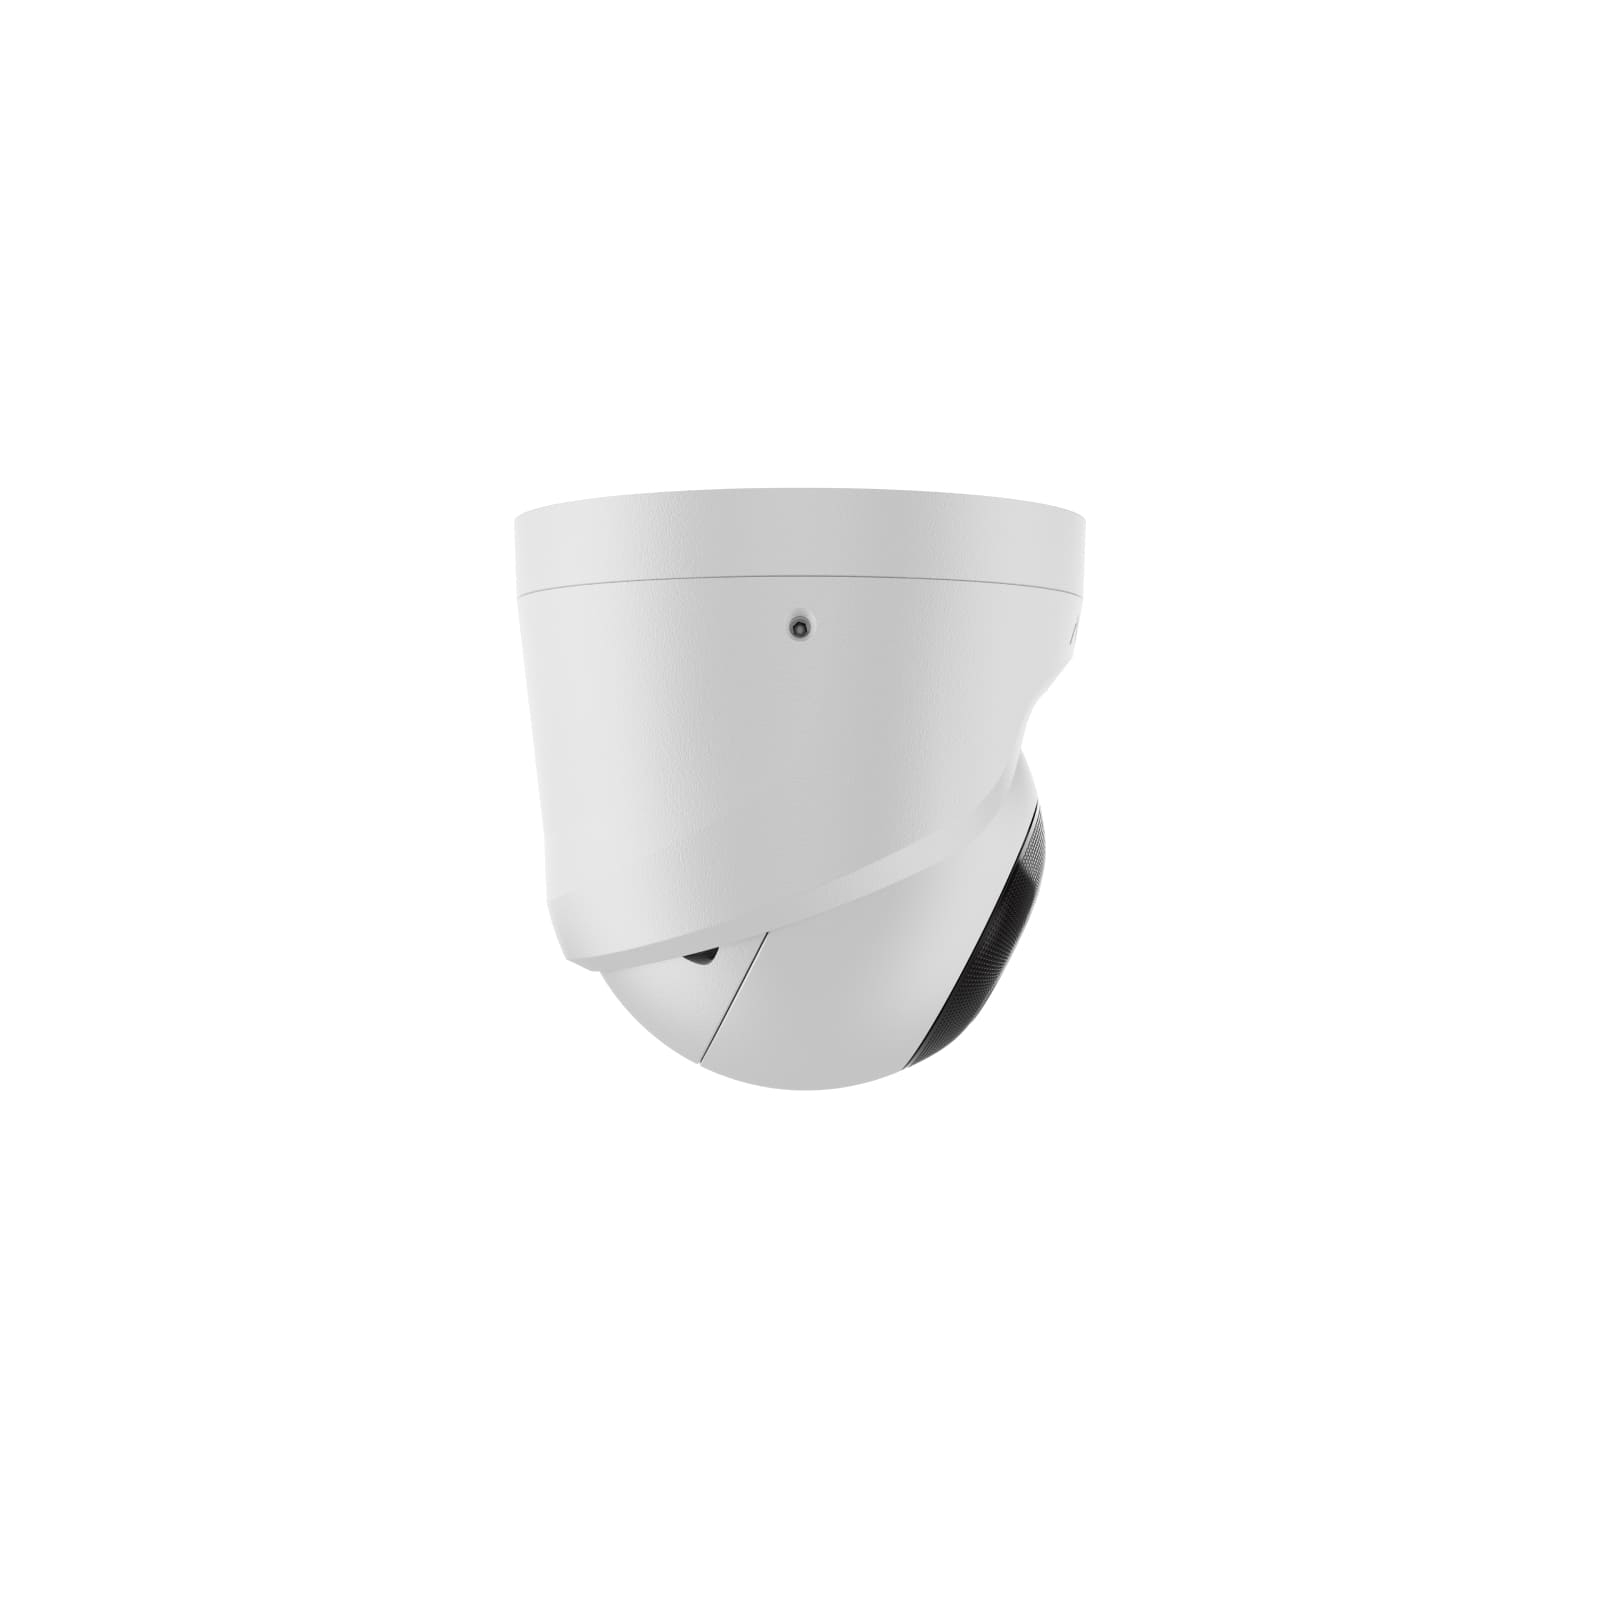 Камера видеонаблюдения Ajax TurretCam (8/4.0) white изображение 3